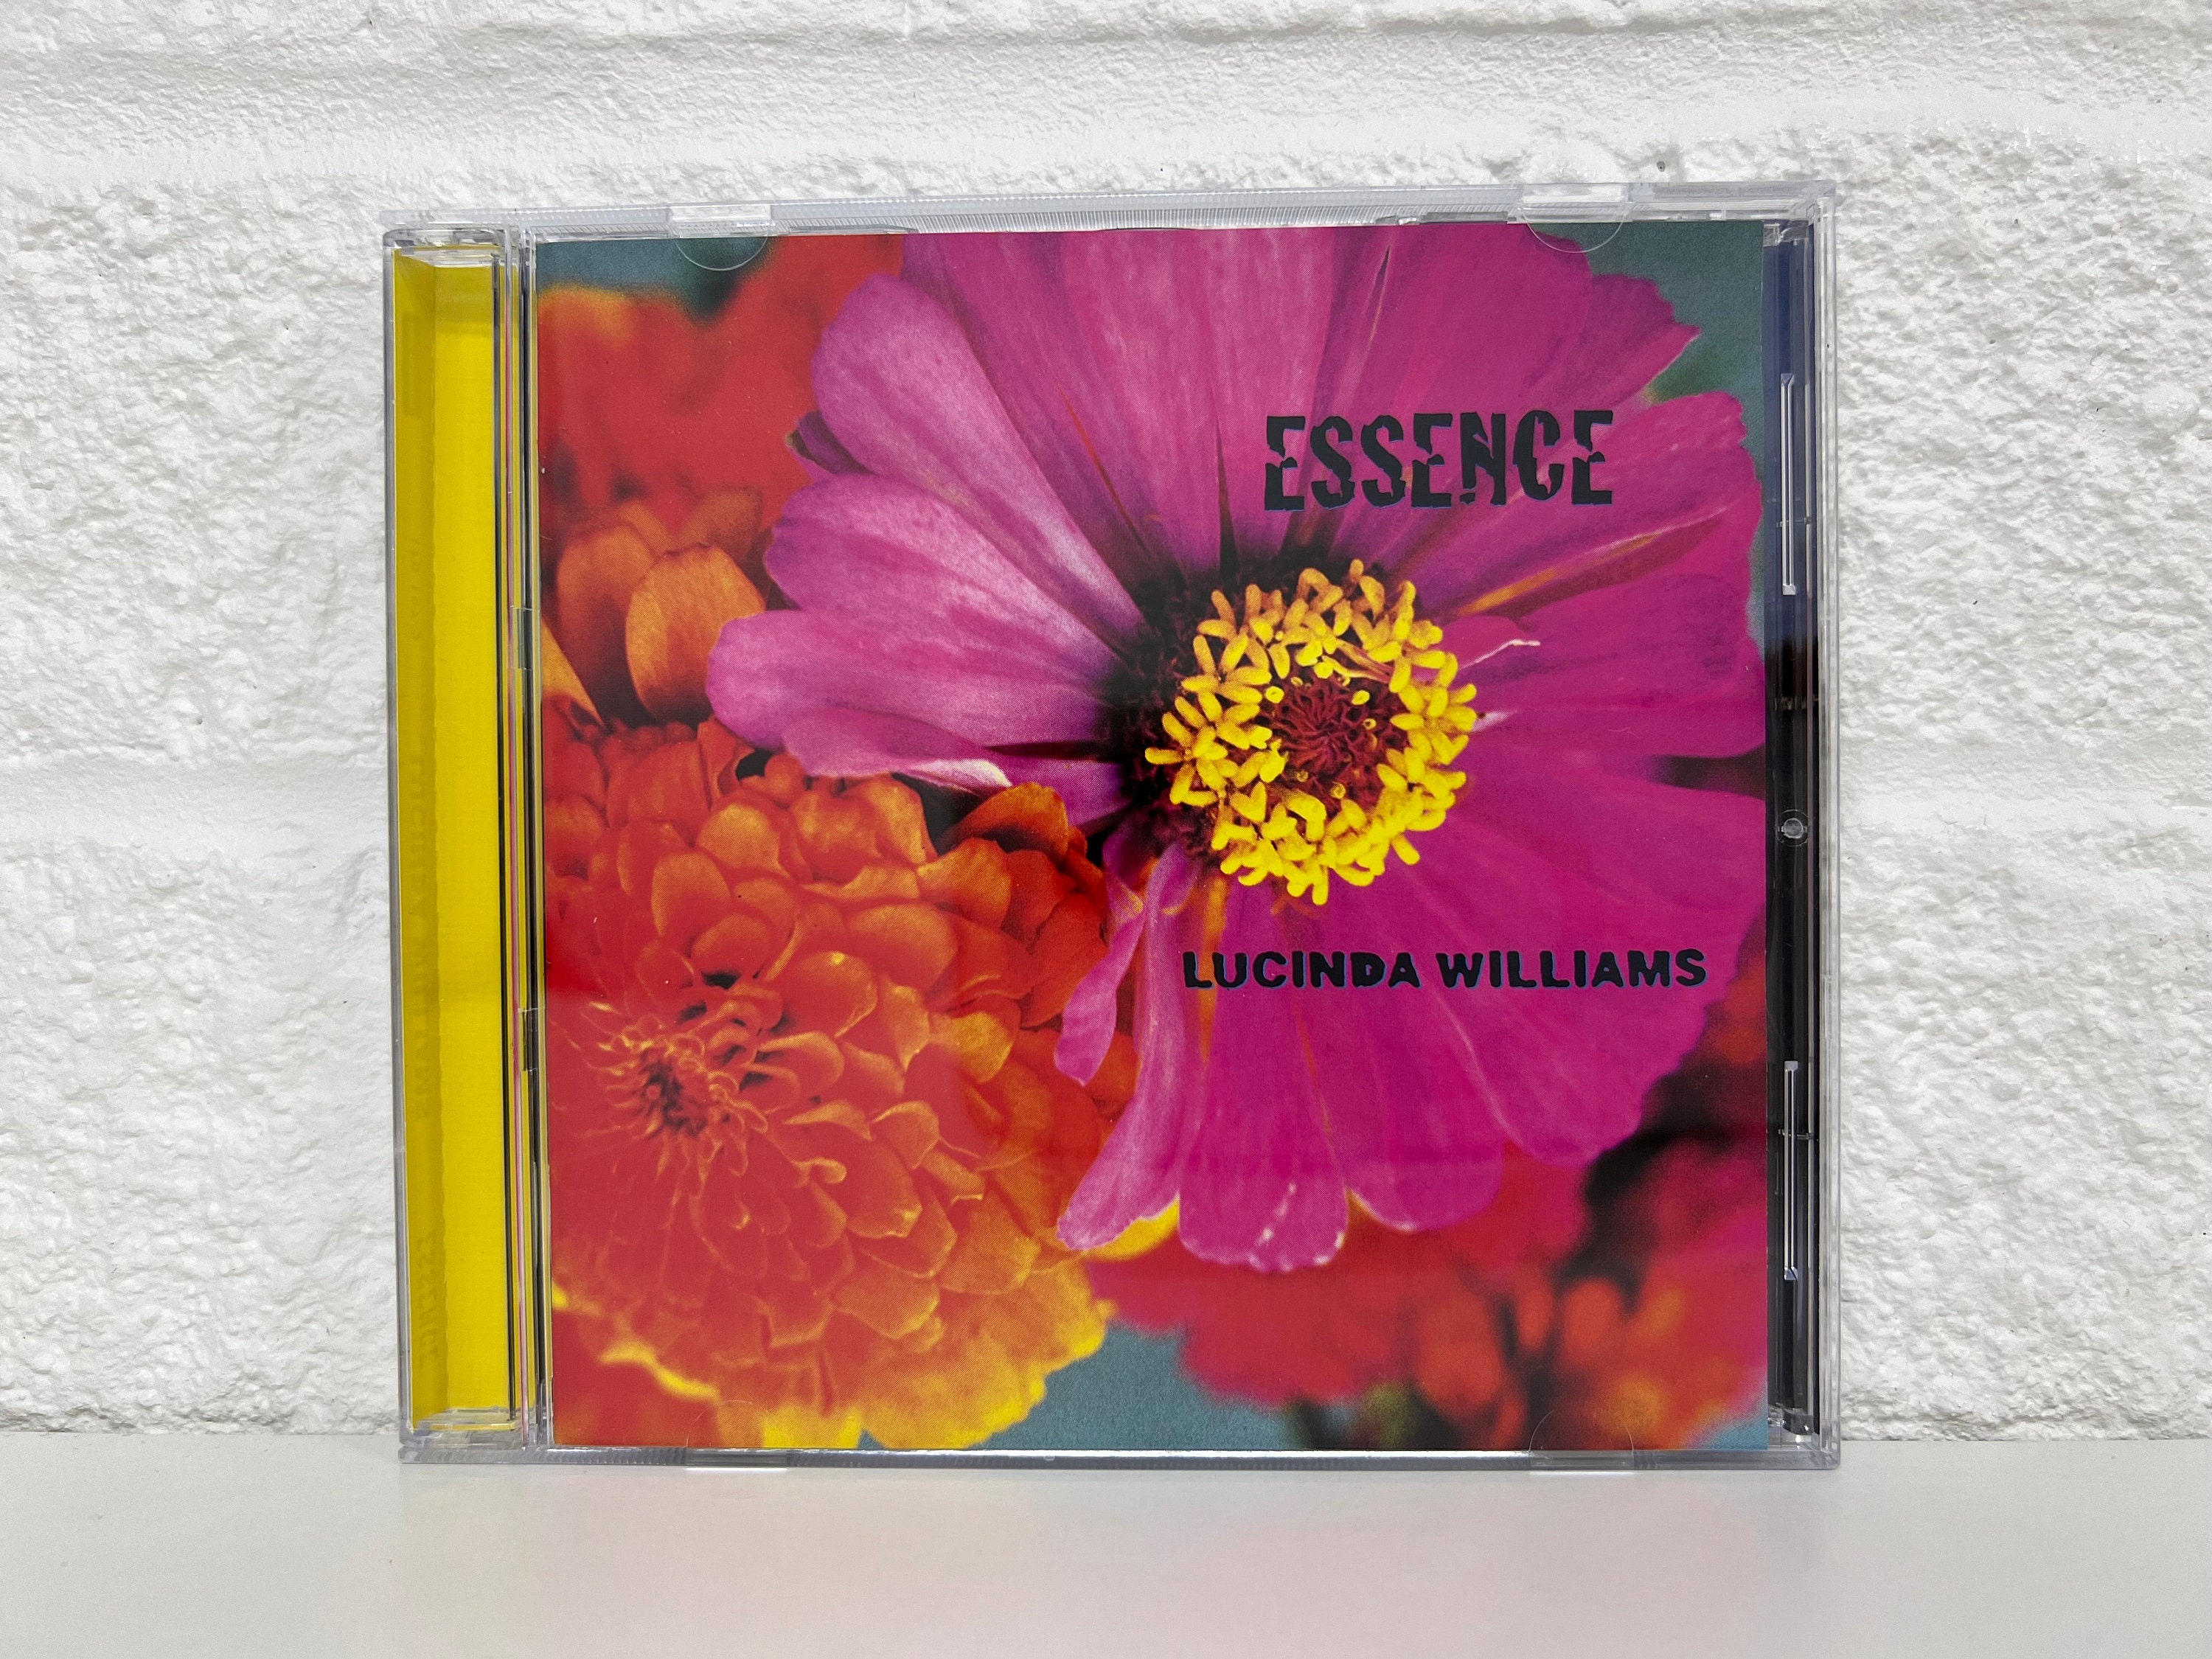 Lucinda Williams CD Collection Album Essence Genre Folk Etsy